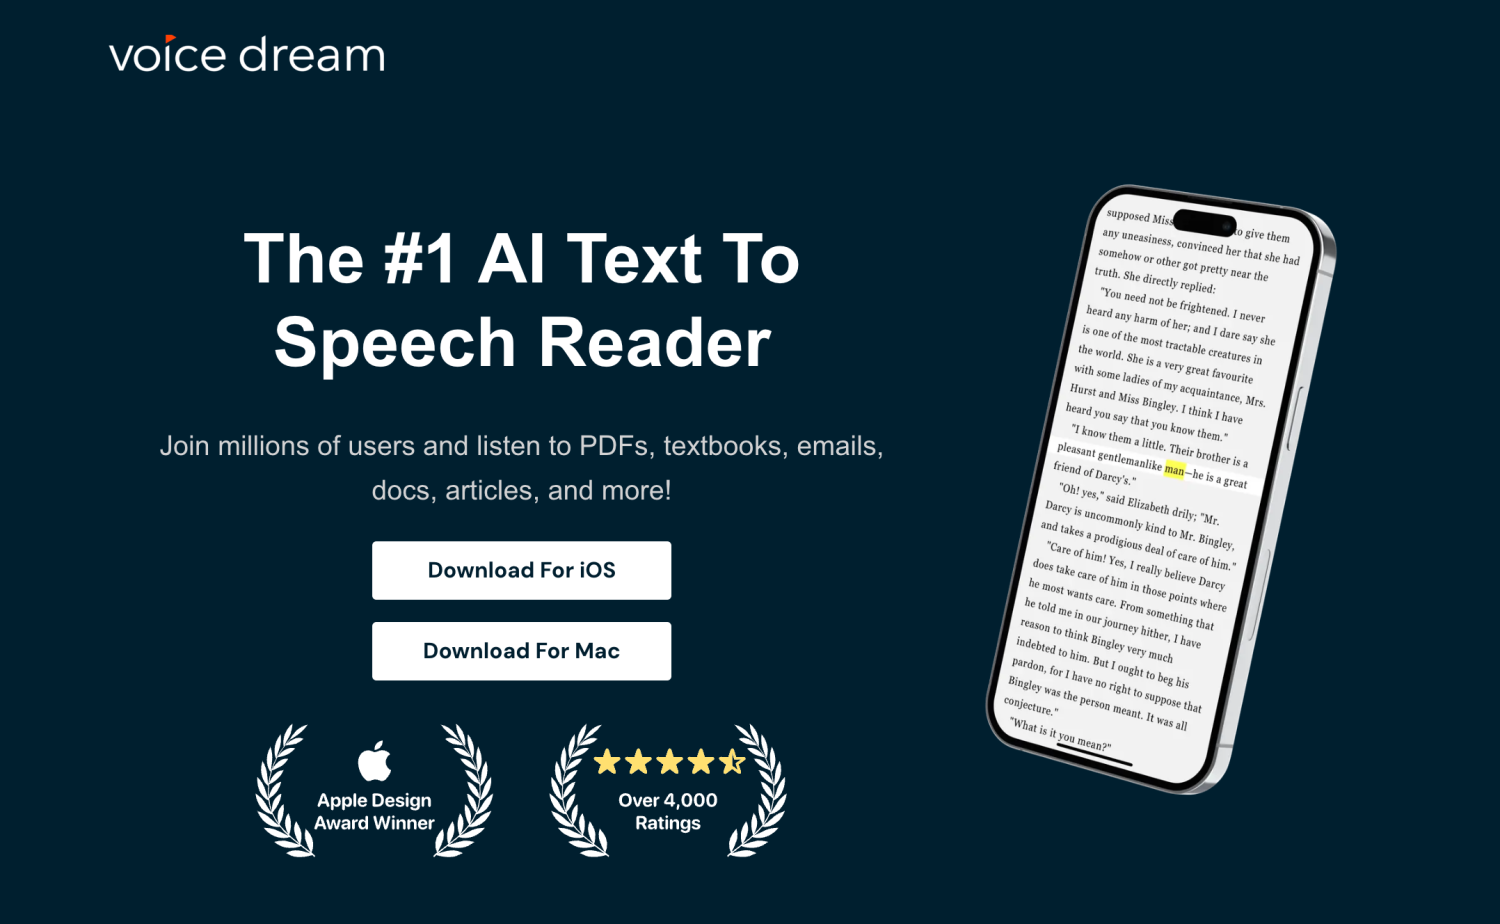 Text "The #1 AI Text To Speech Reader Voice Dream Reader"